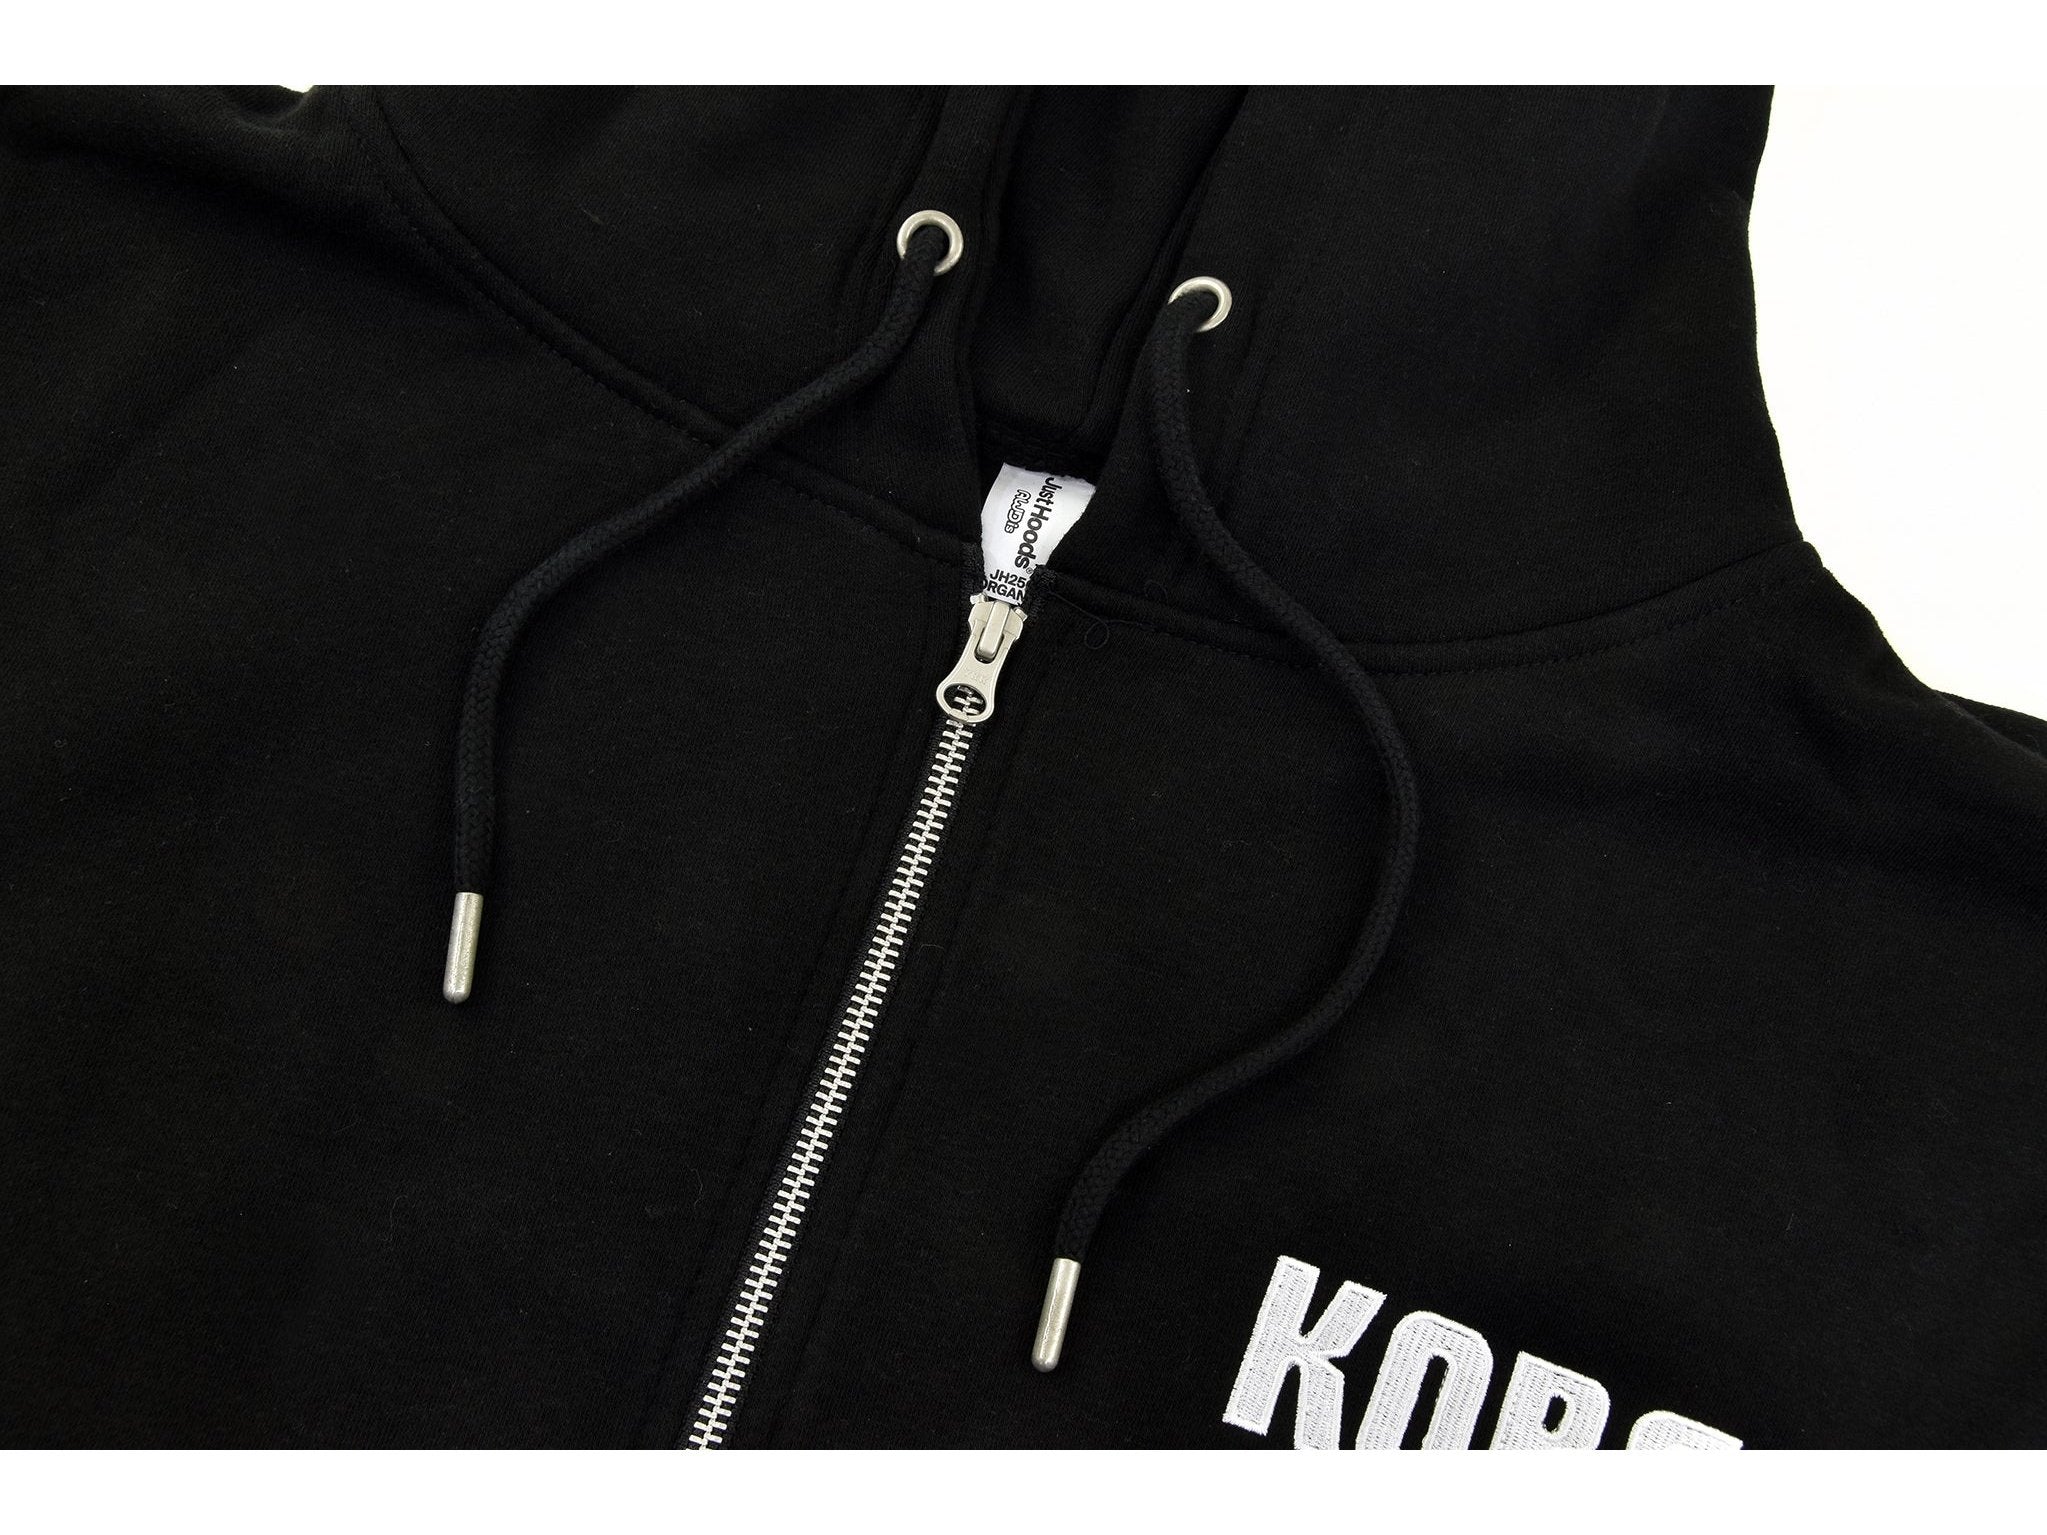 Korg Logo Zipped Hoodie 2